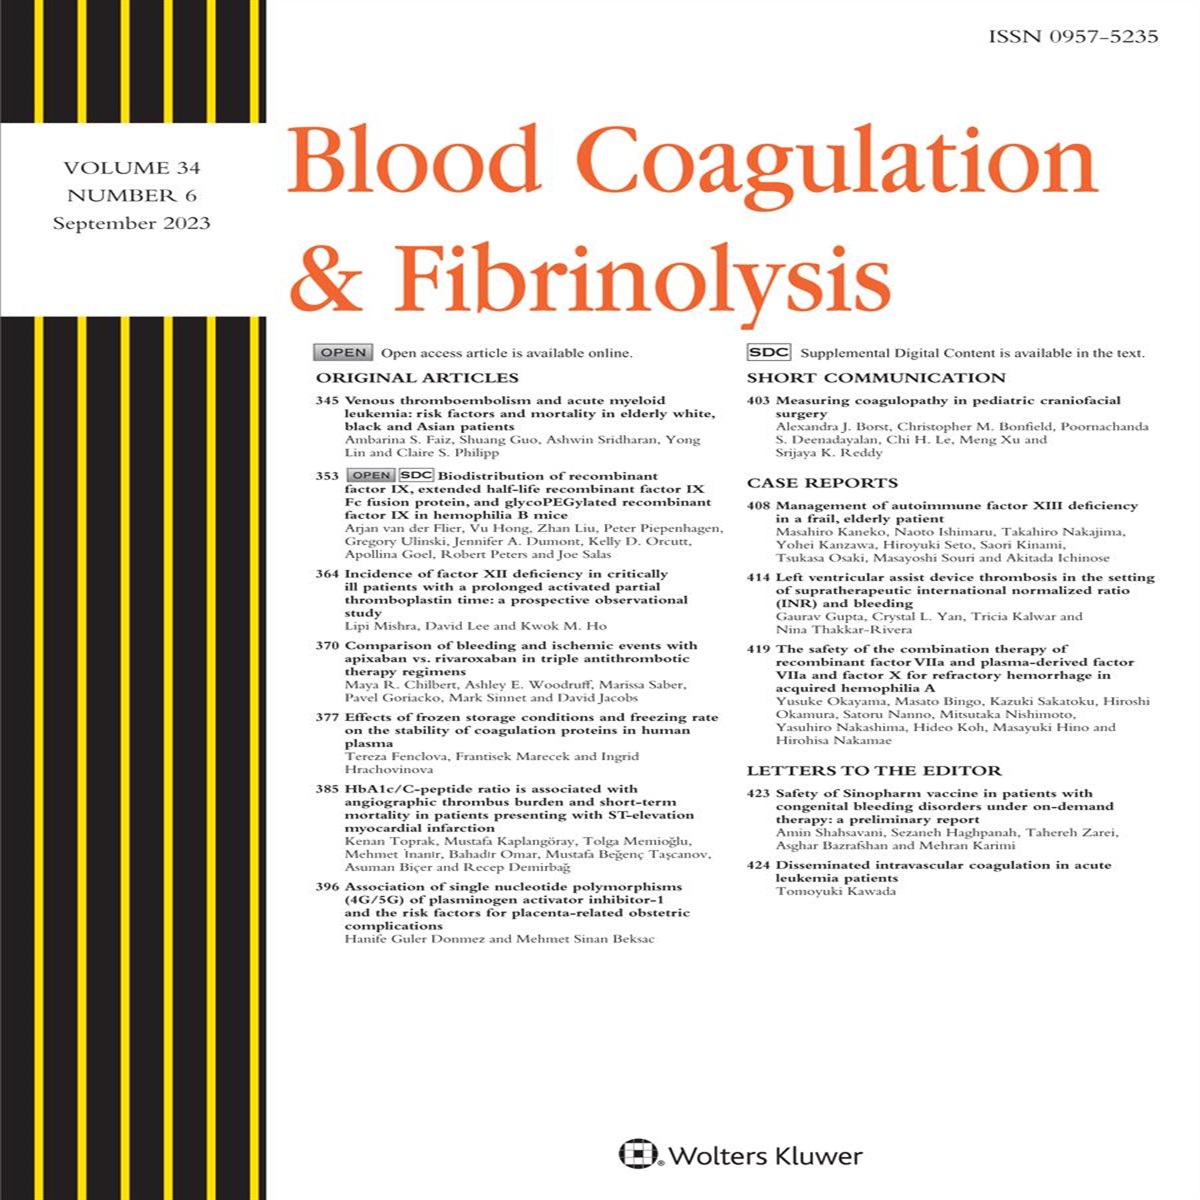 Disseminated intravascular coagulation in acute leukemia patients